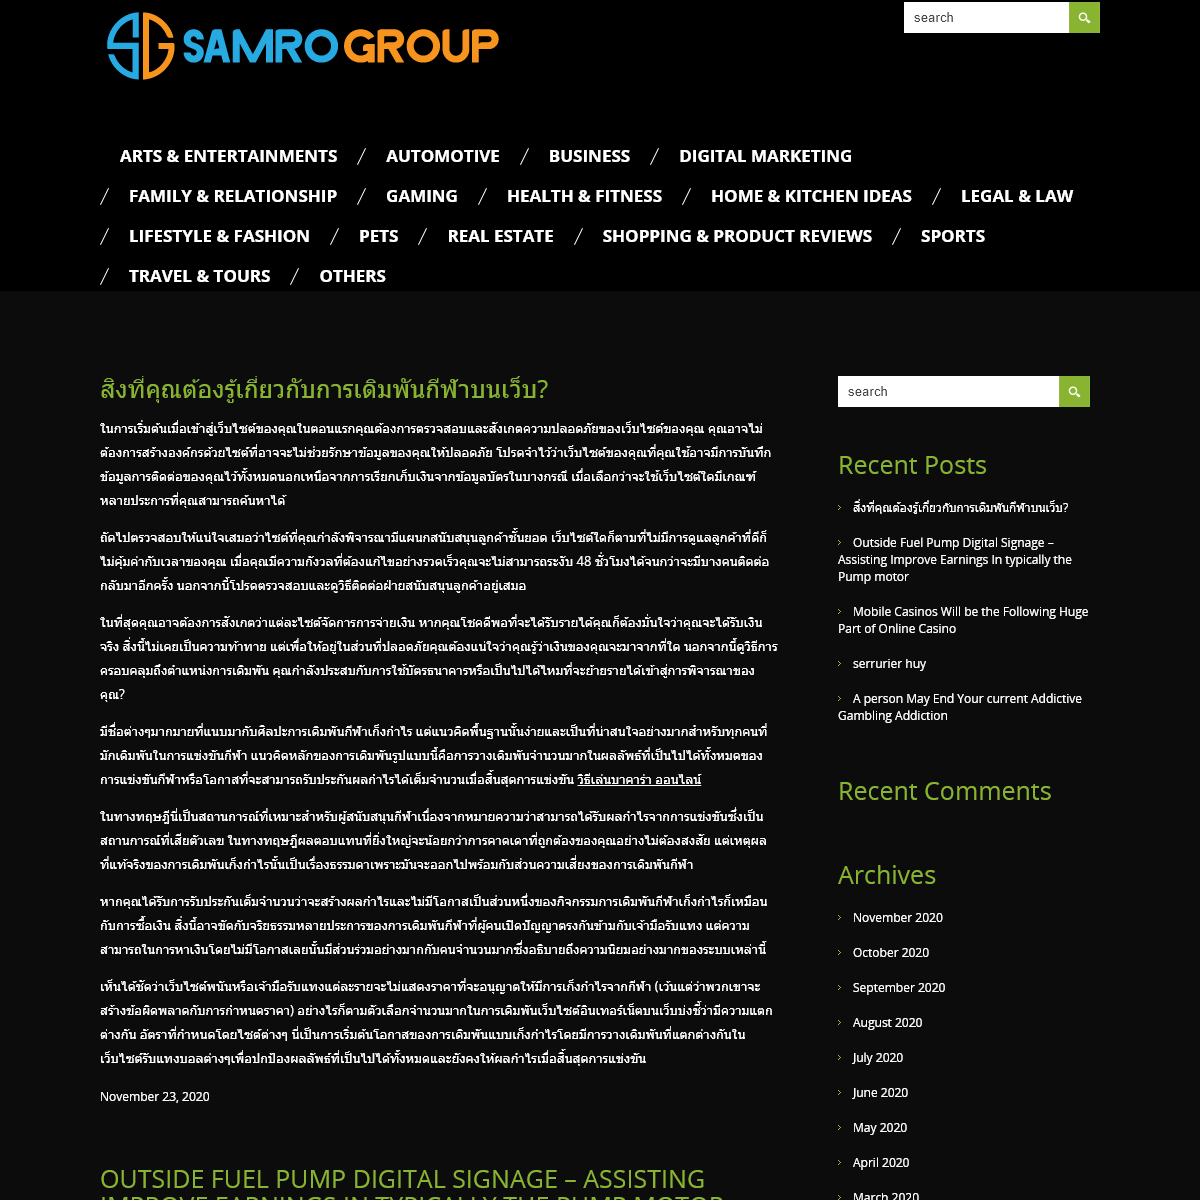 A complete backup of samrogroup.com